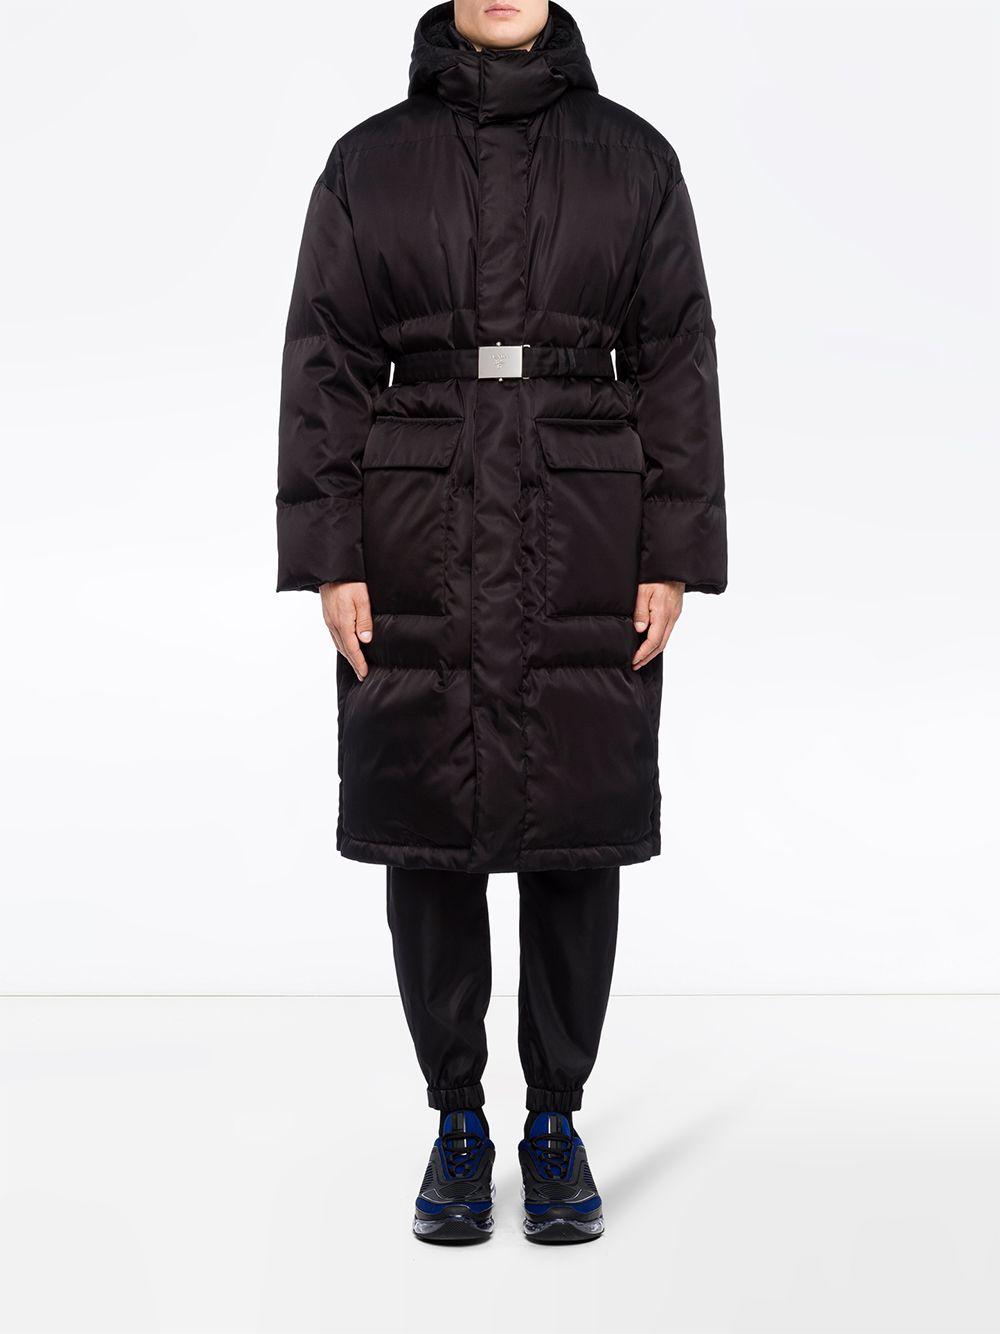 Prada Synthetic Re-nylon Puffer Coat in Black for Men - Lyst